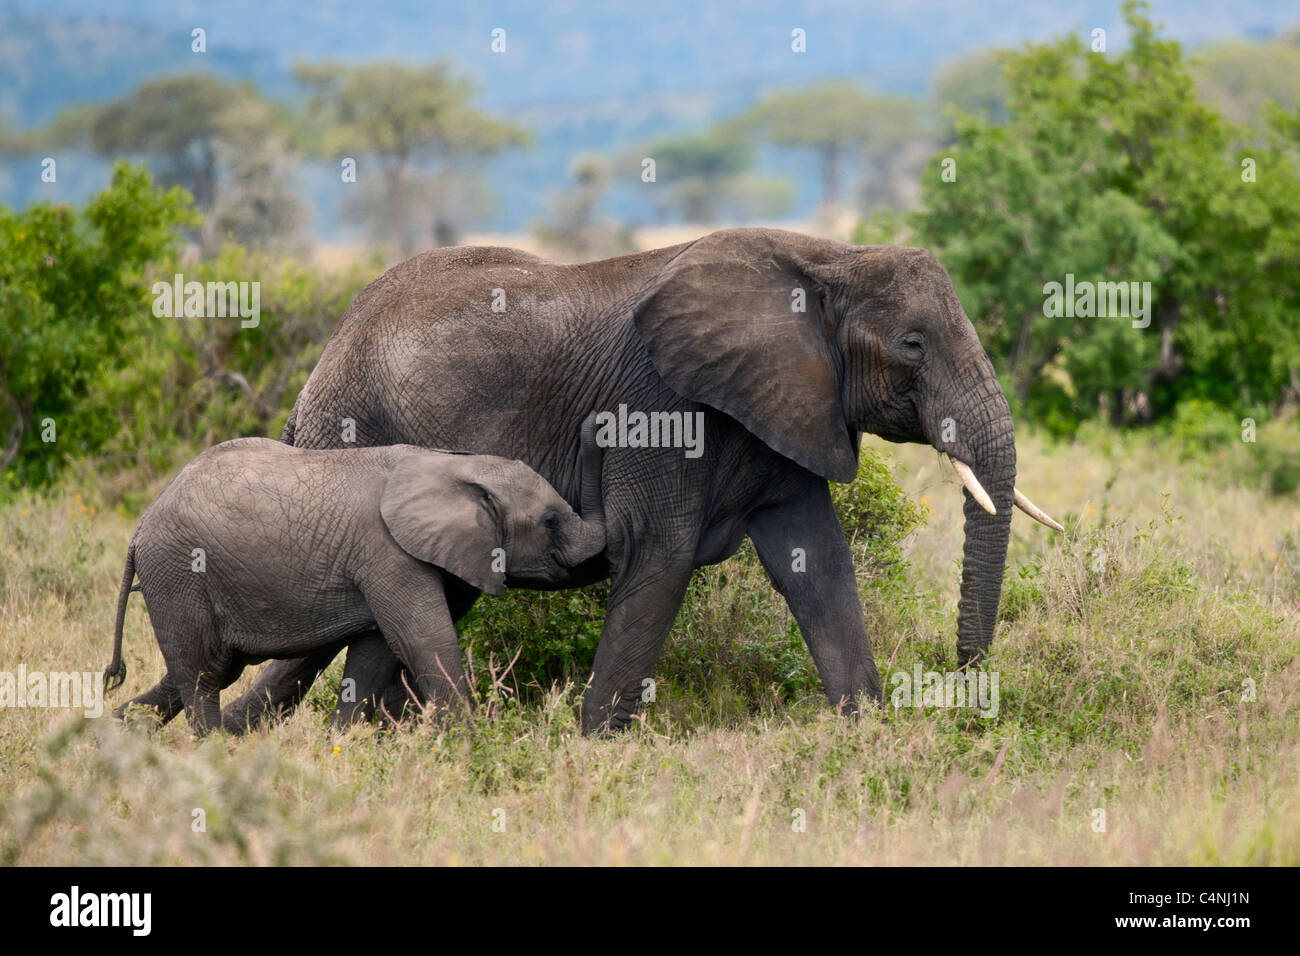 Elephants in Serengeti National Park, Tanzania, Africa Stock Photo